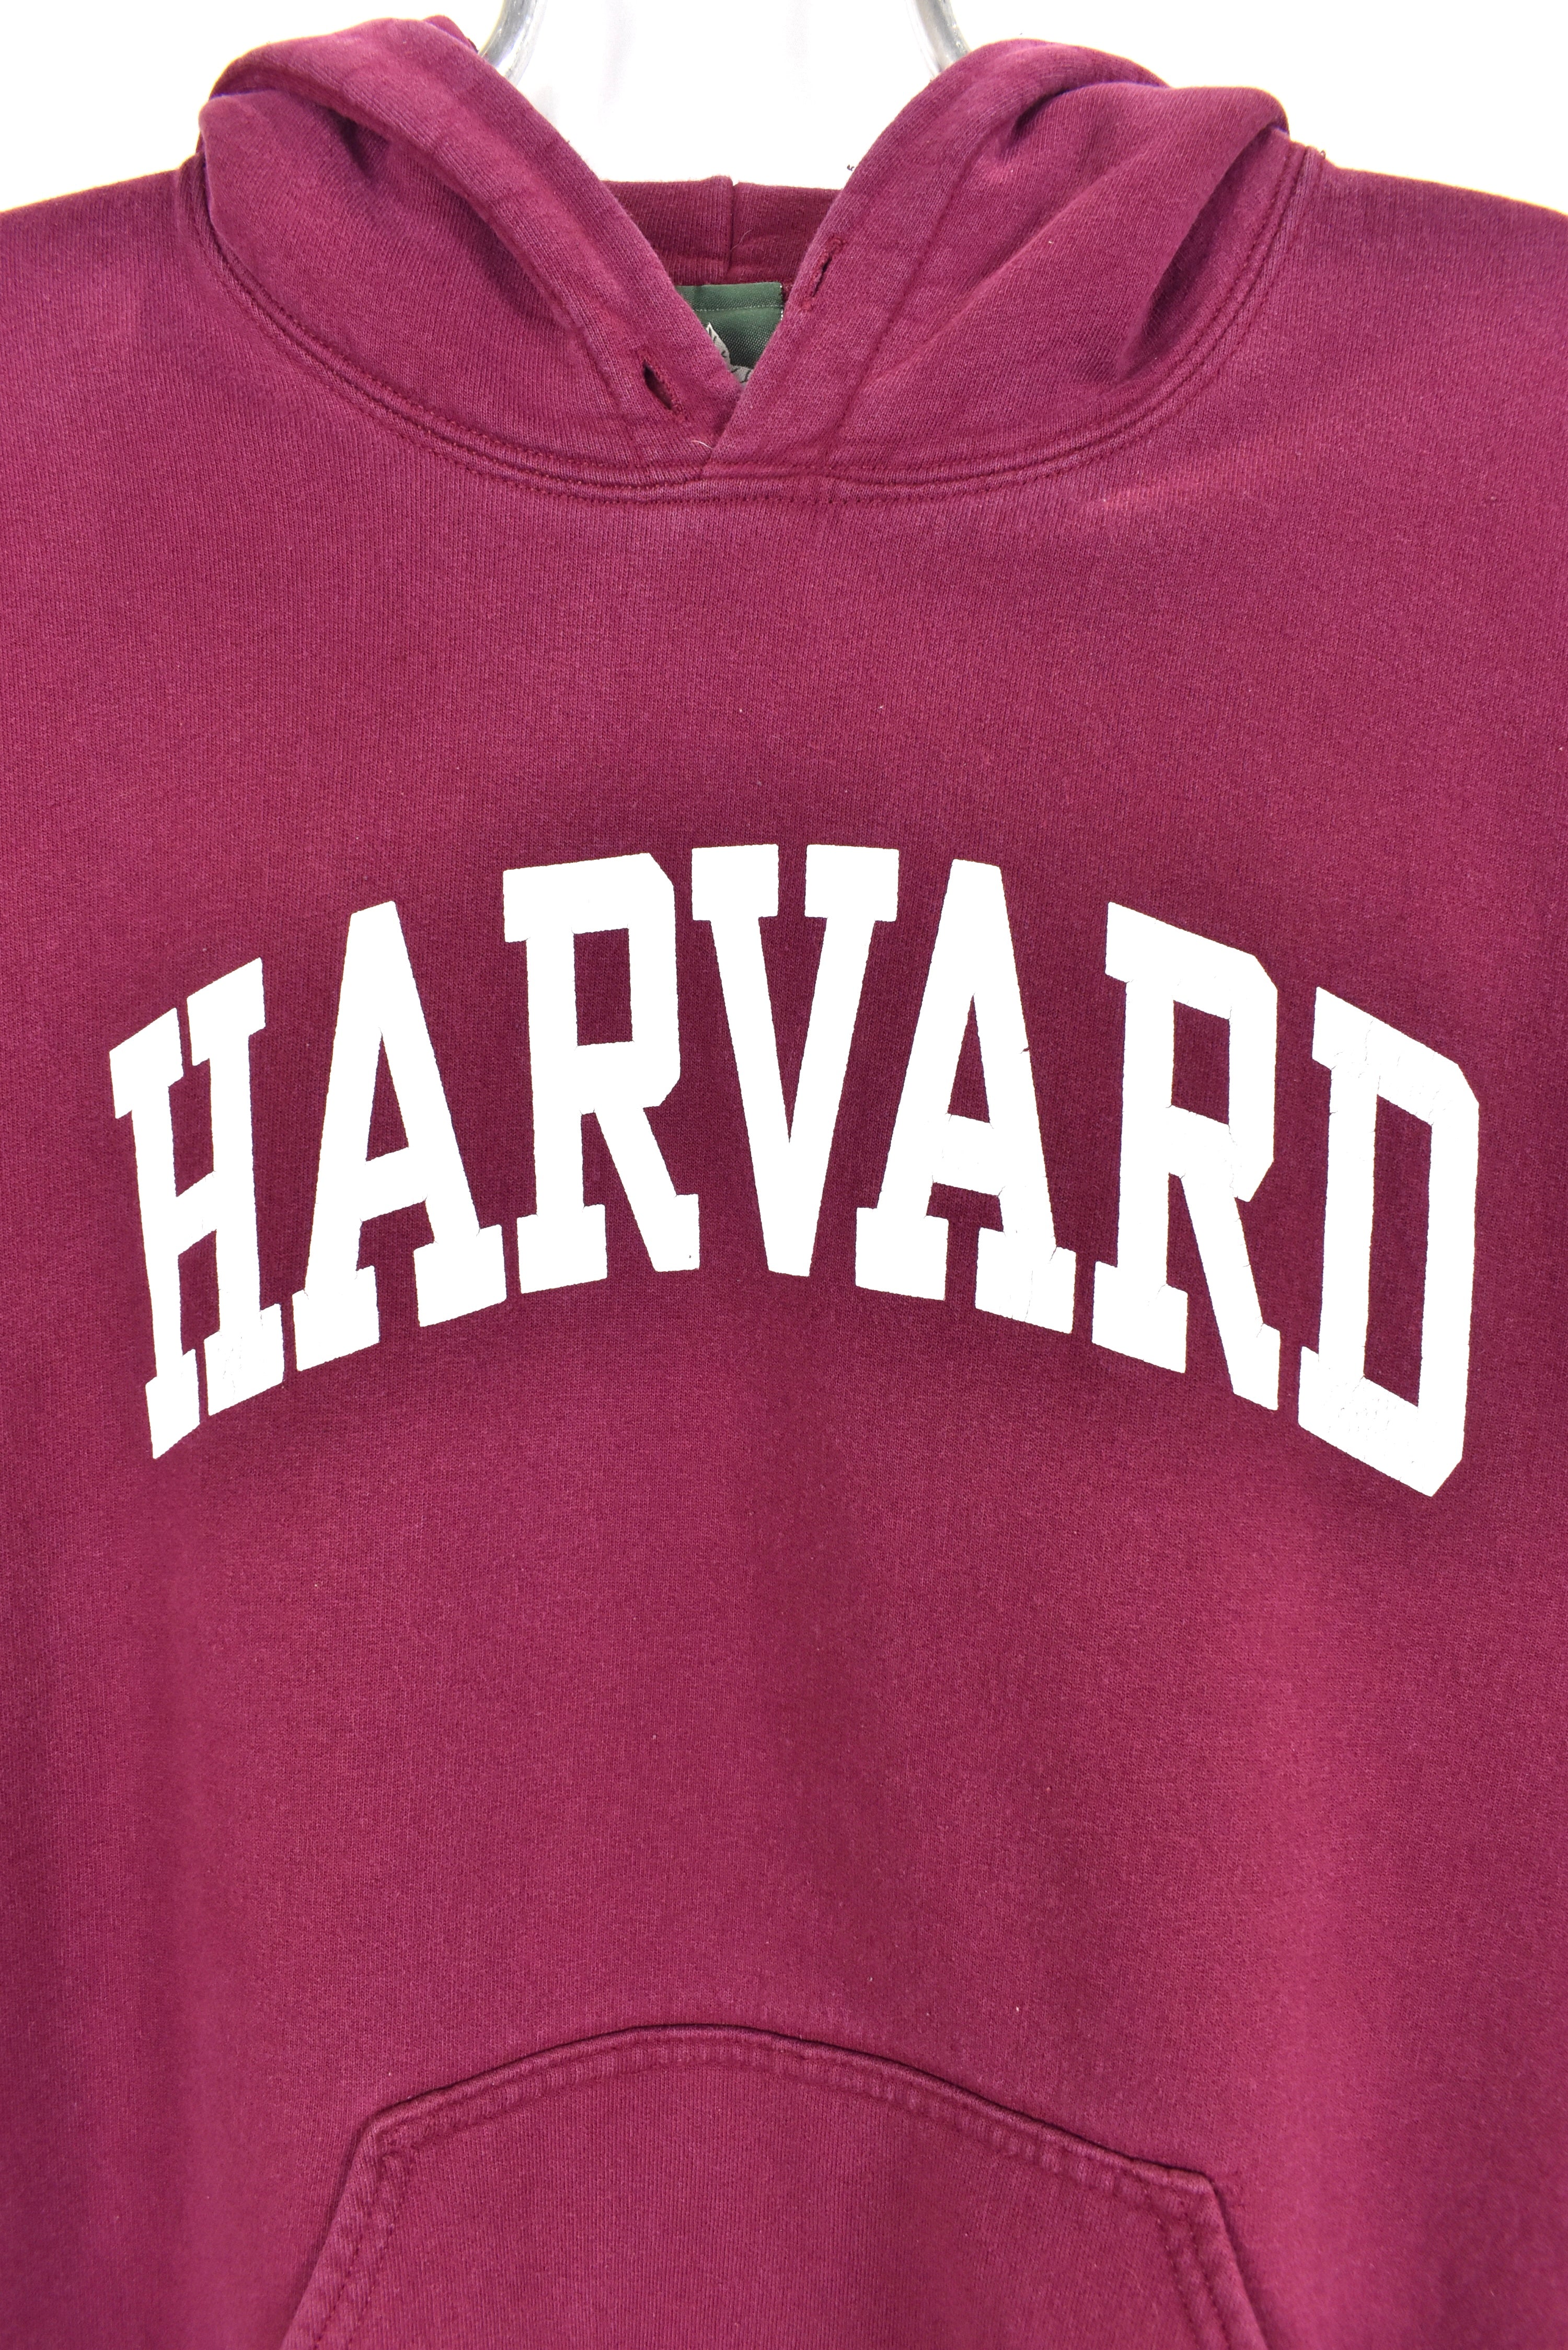 Vintage Harvard University hoodie, burgundy graphic sweatshirt - AU Medium COLLEGE